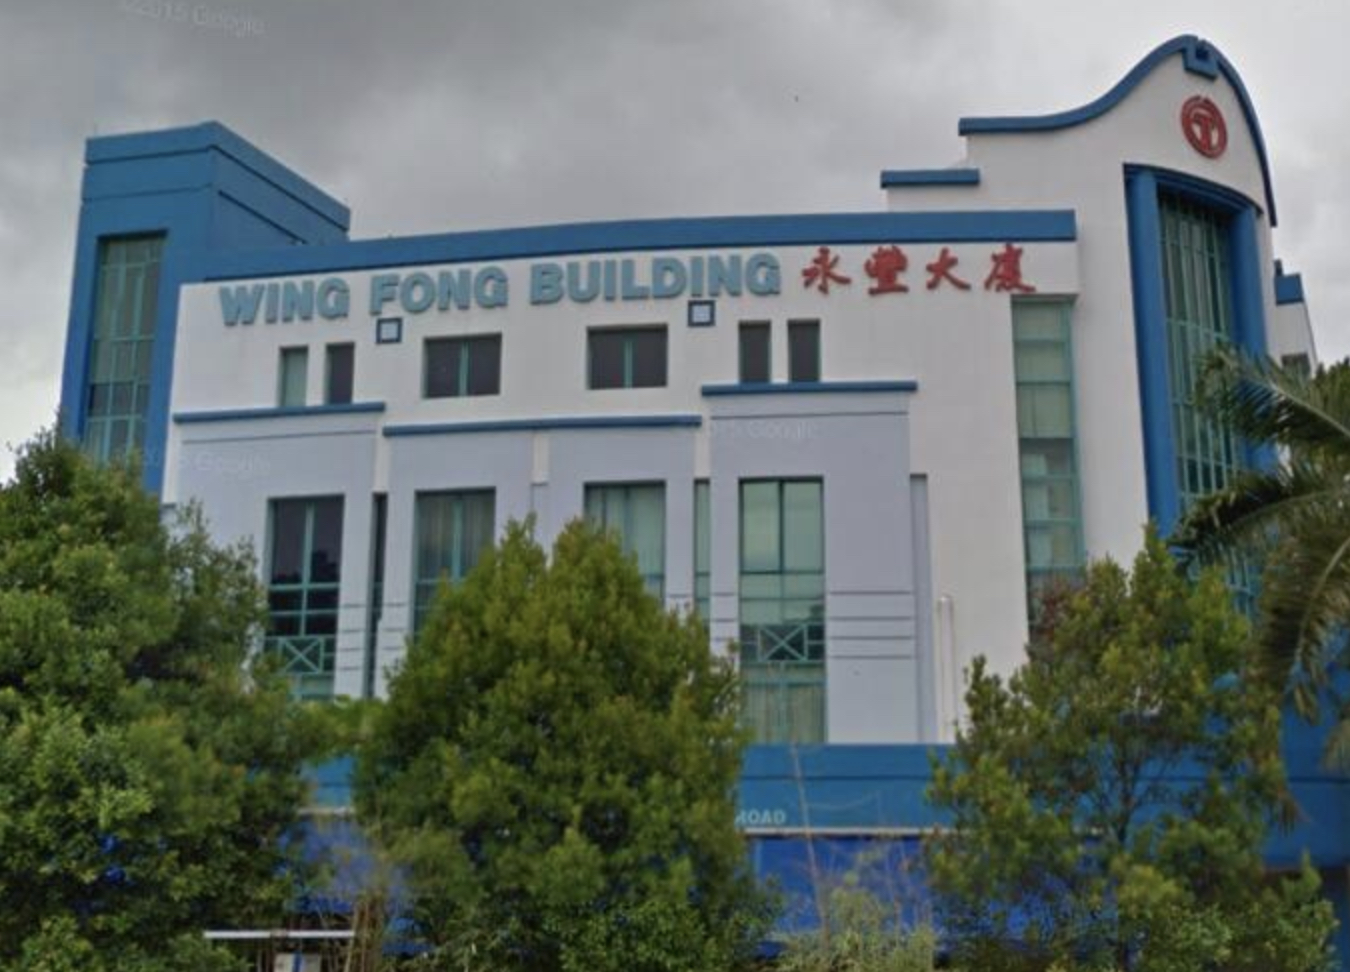 Wing Fong Building